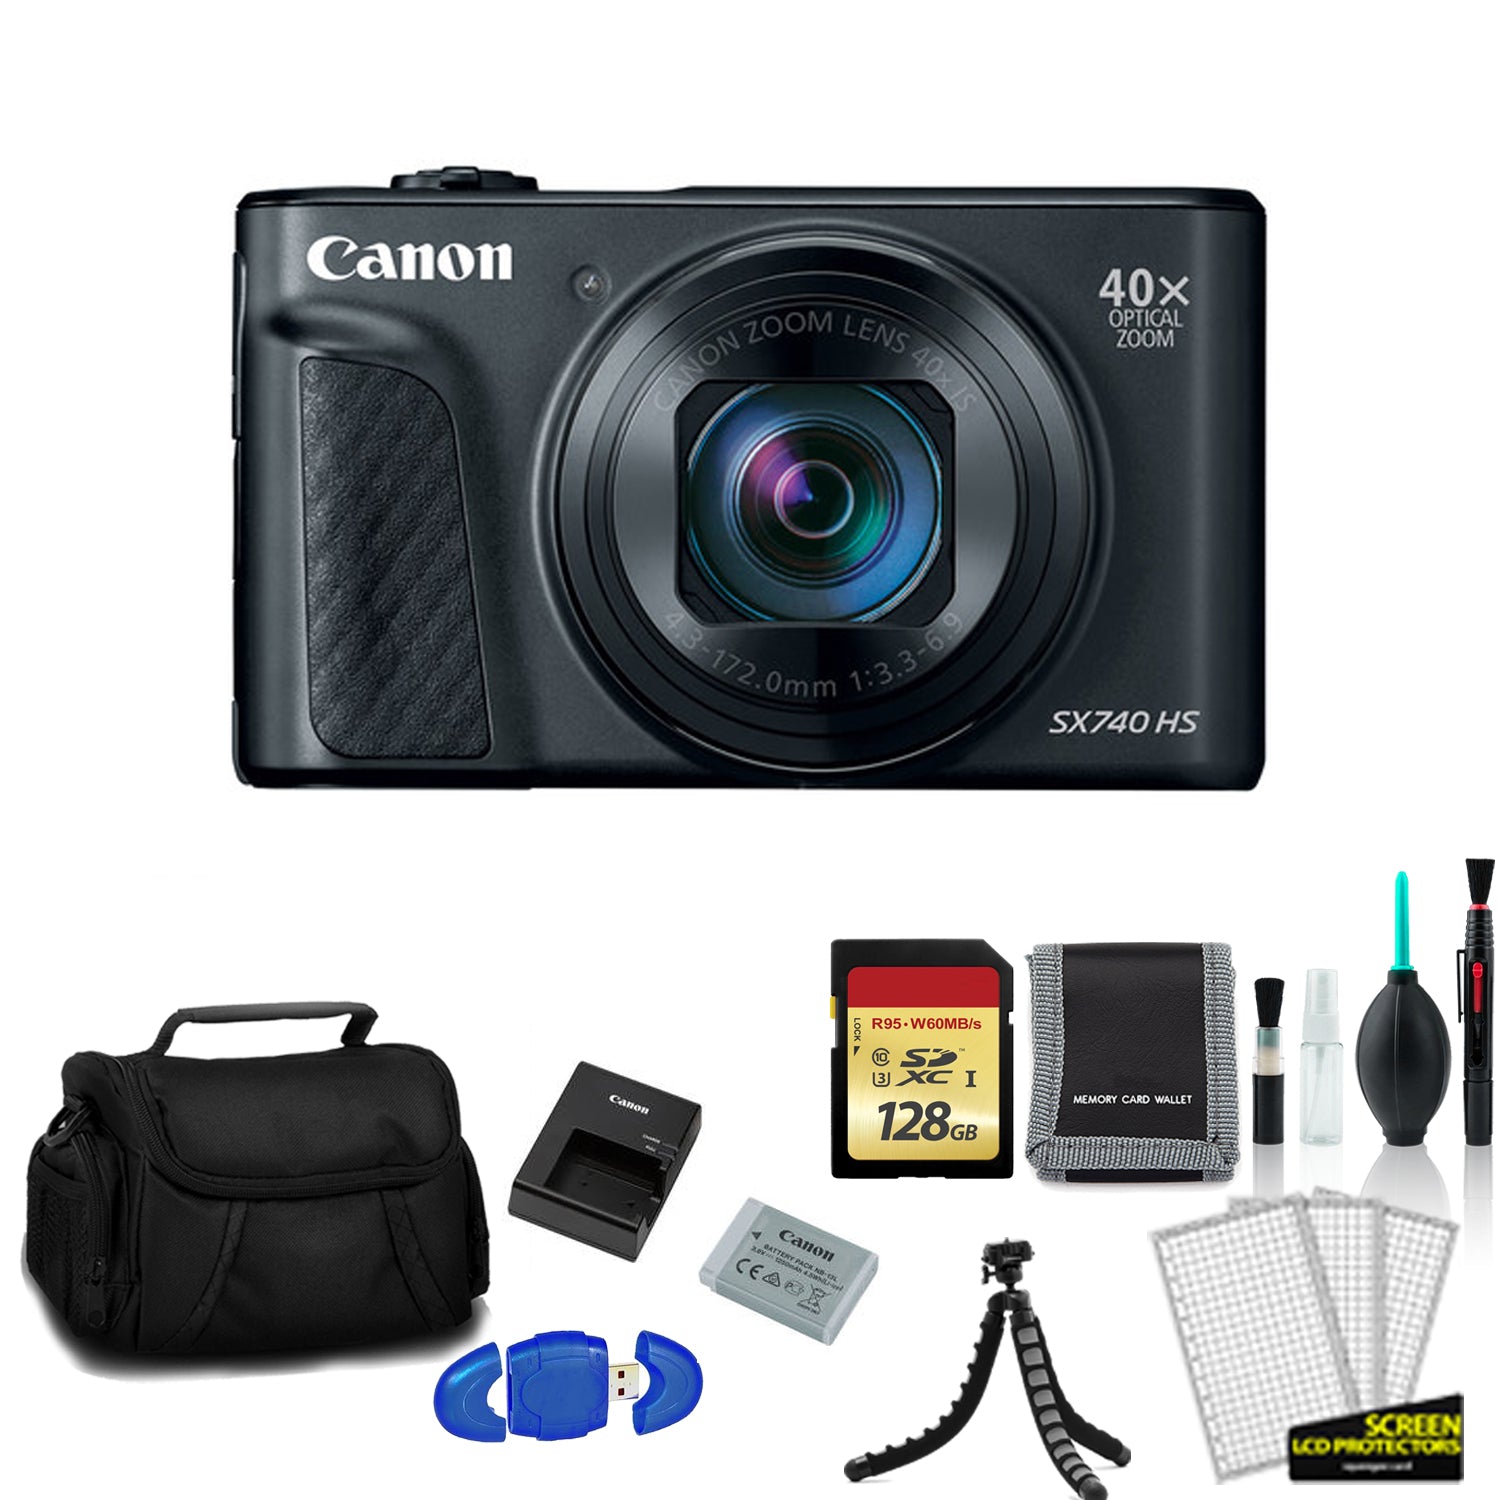 Canon PowerShot SX740 HS Digital Camera (Black) with 128GB Memory Card + More - International Model